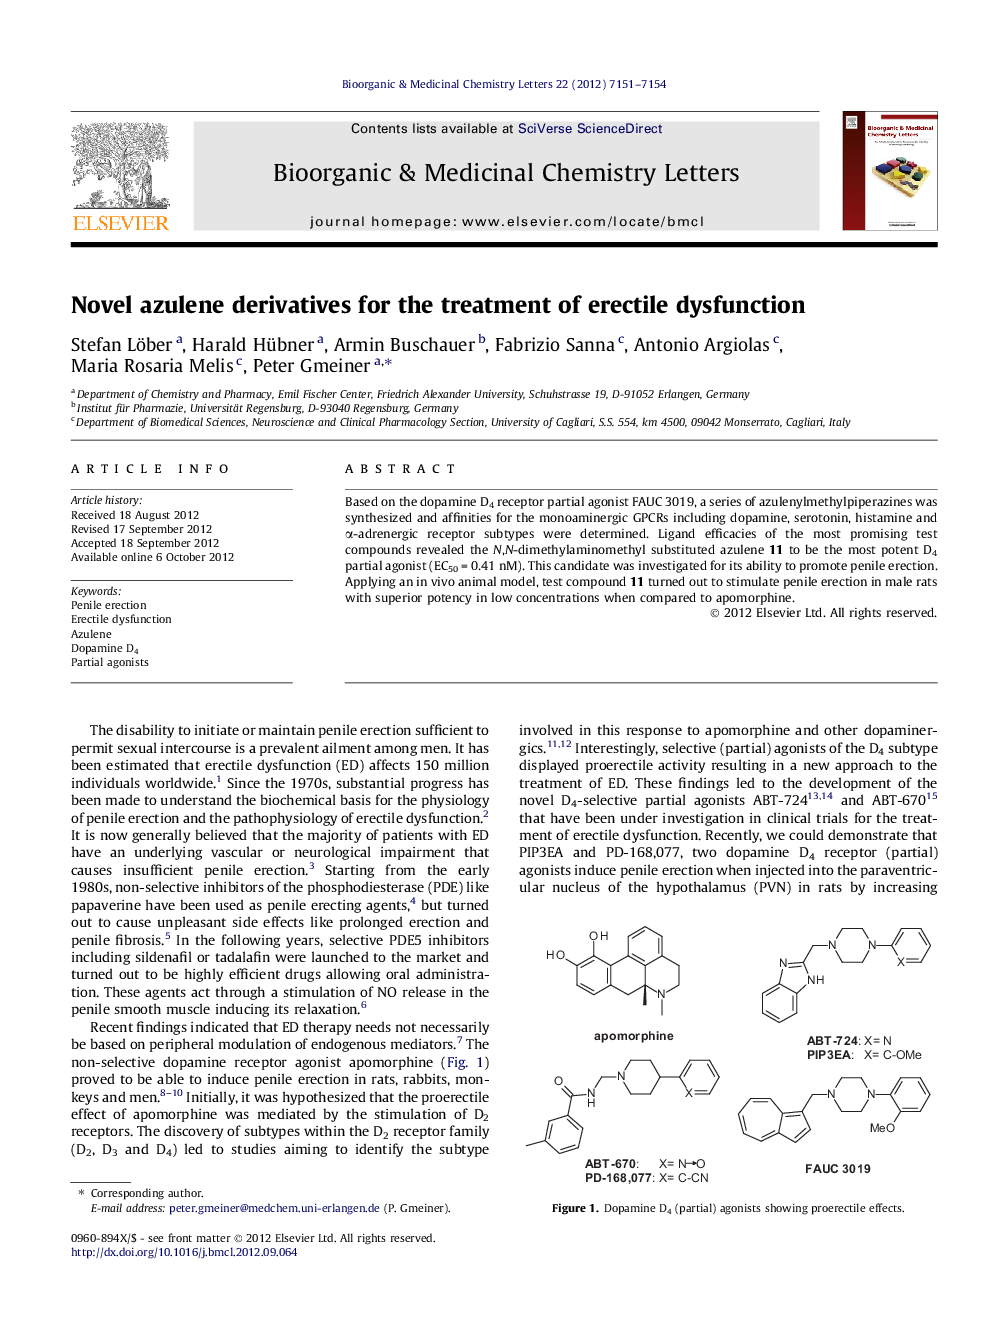 Novel azulene derivatives for the treatment of erectile dysfunction